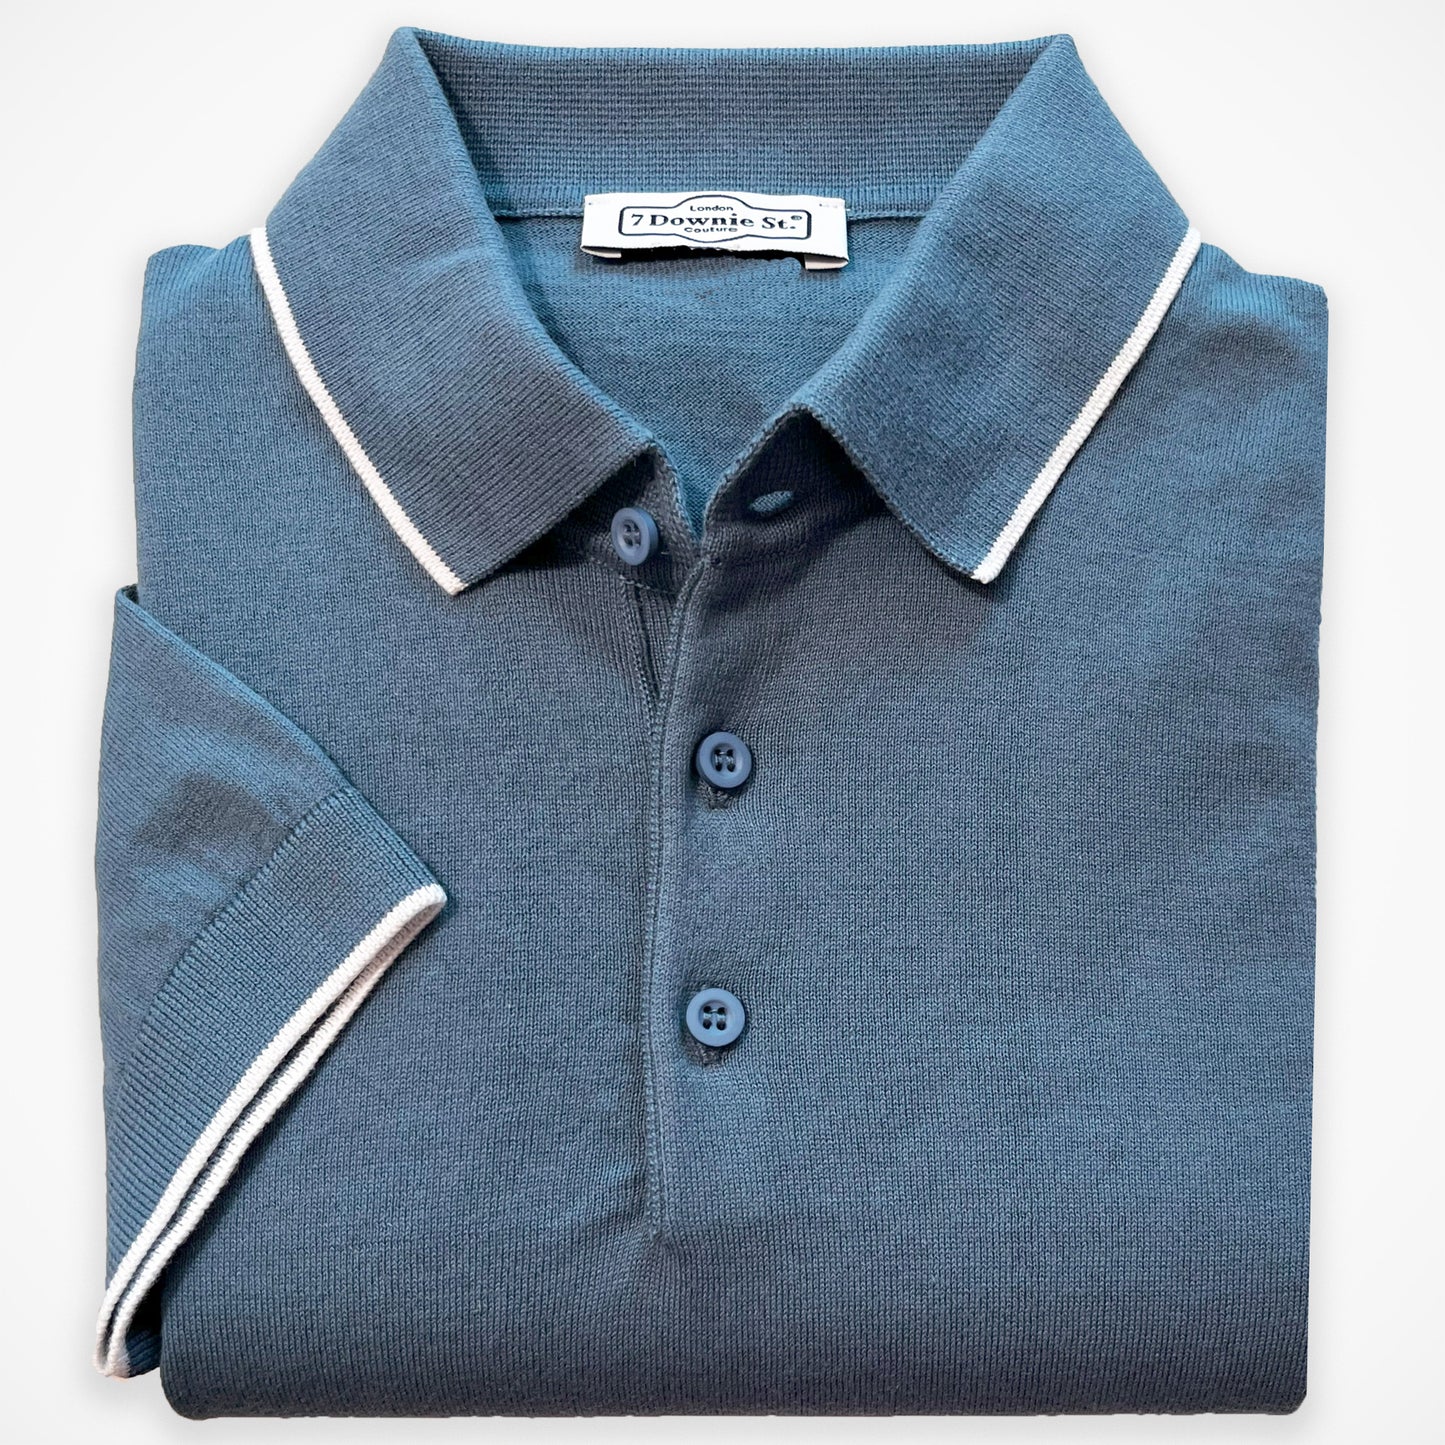 7 Downie St. 'Blue Knit Polo' T-Shirt